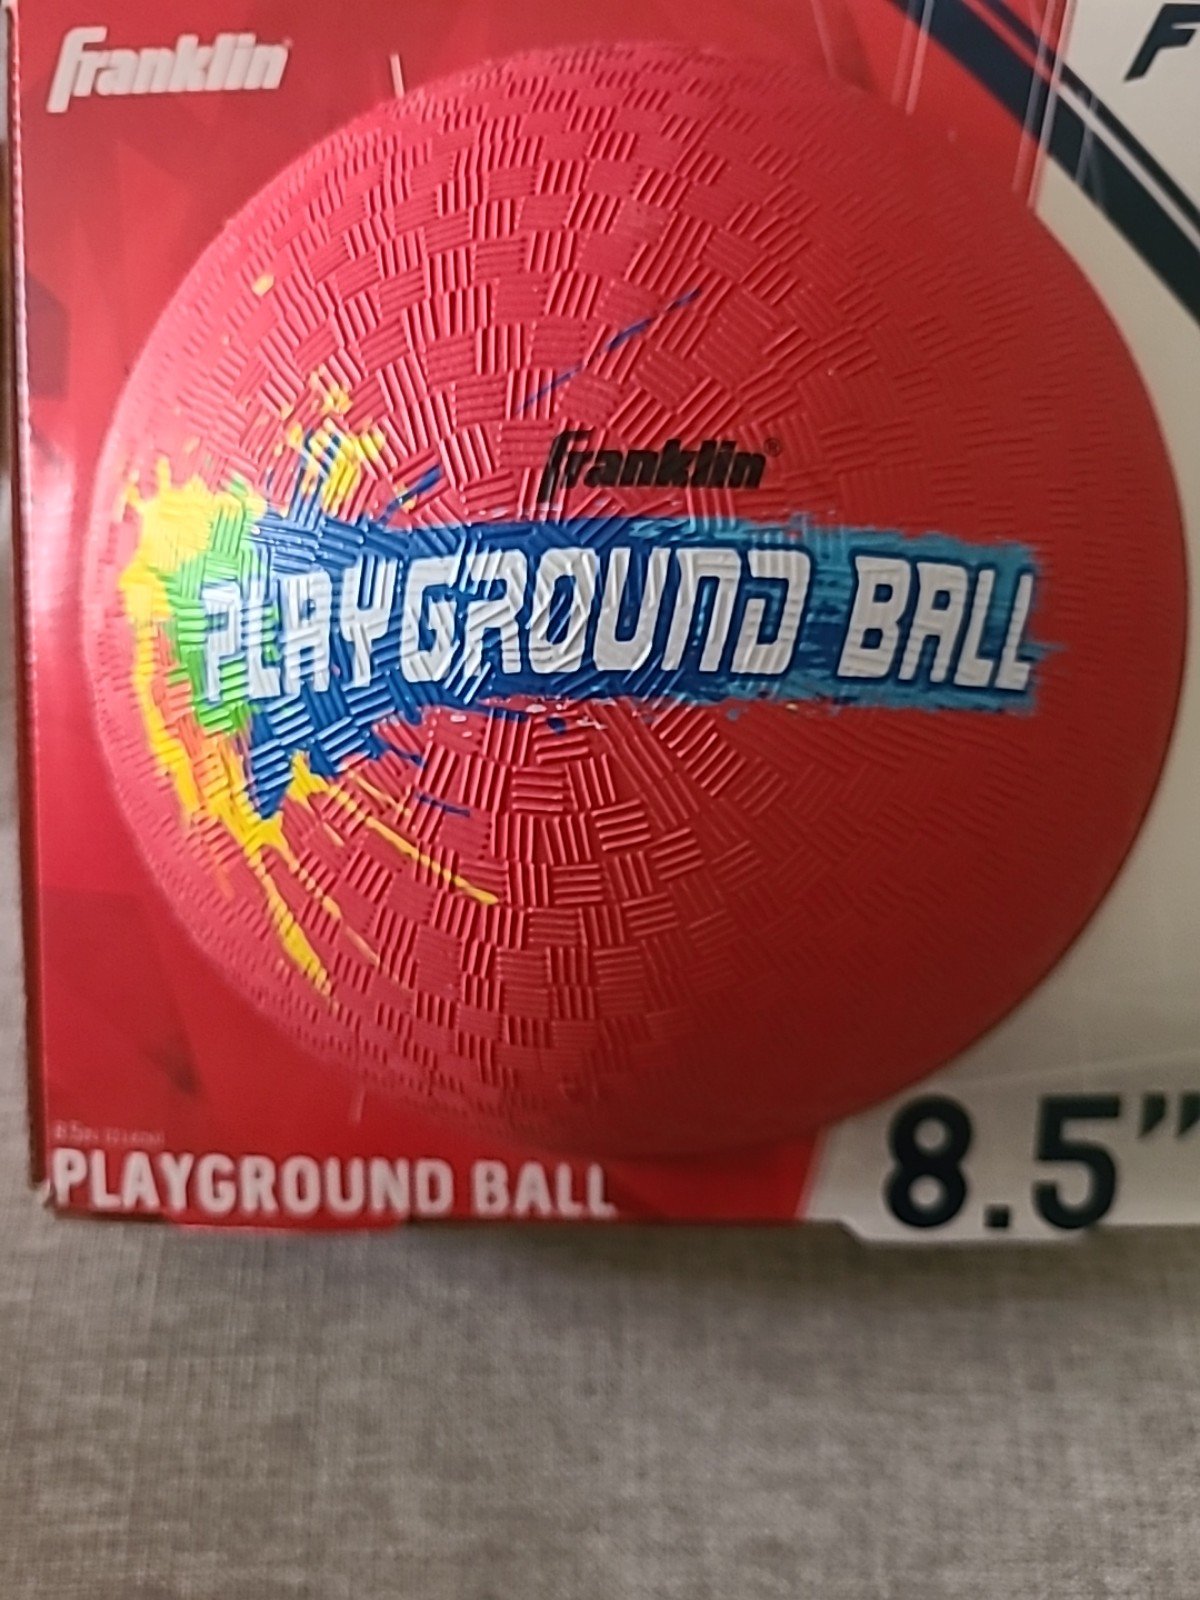 New Playground Ball Franklin PVC 8.5 Inch Playground Kids Ball Brand New 28BPt0hKc